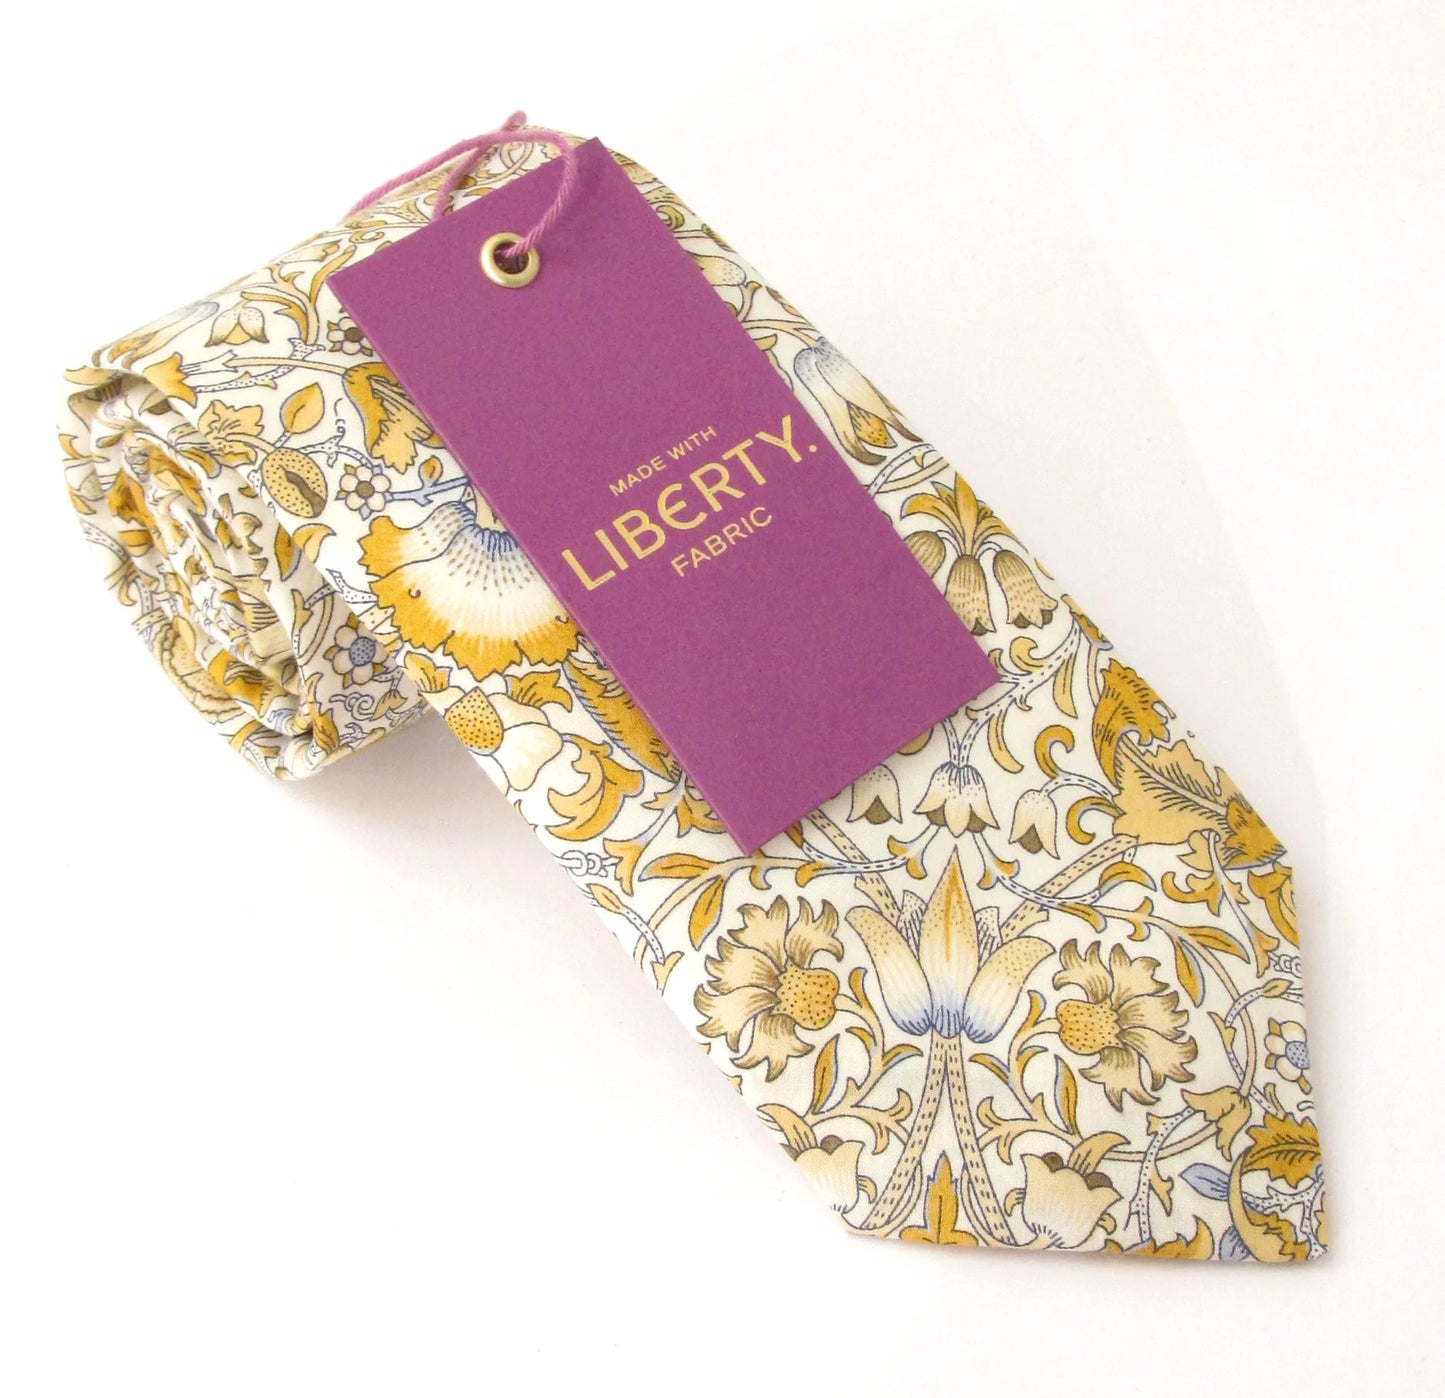 Lodden Old Gold Liberty fabric tie by Van Buck